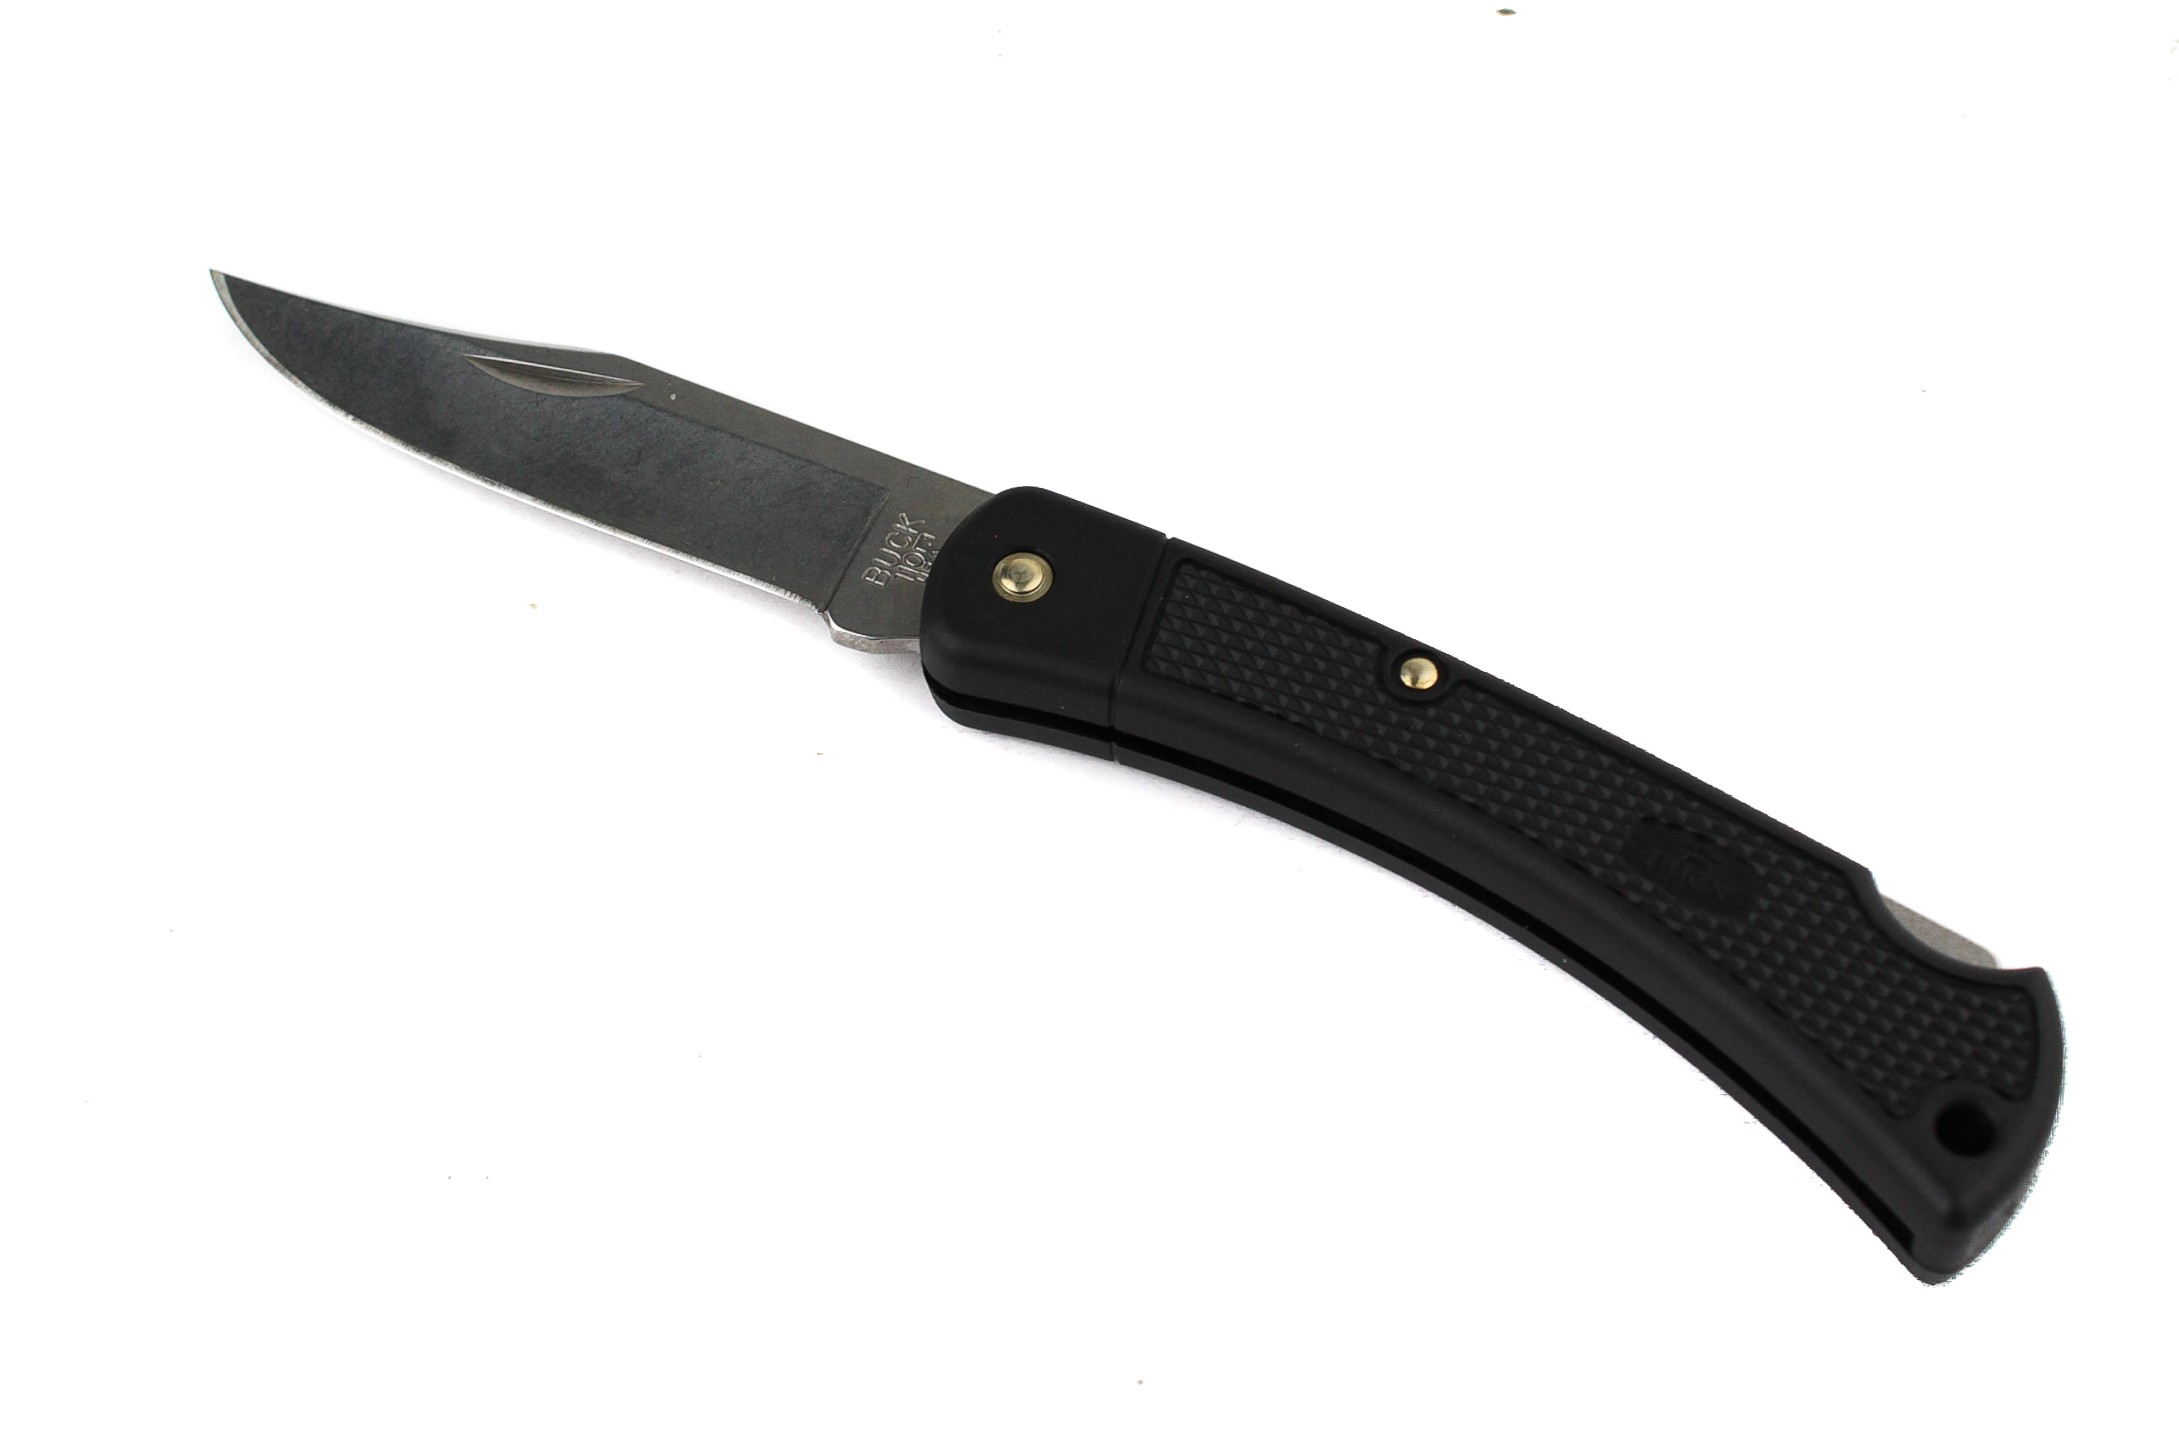 Нож Buck Folding Hunter LT складной сталь 420HC рукоять нейлон - фото 1